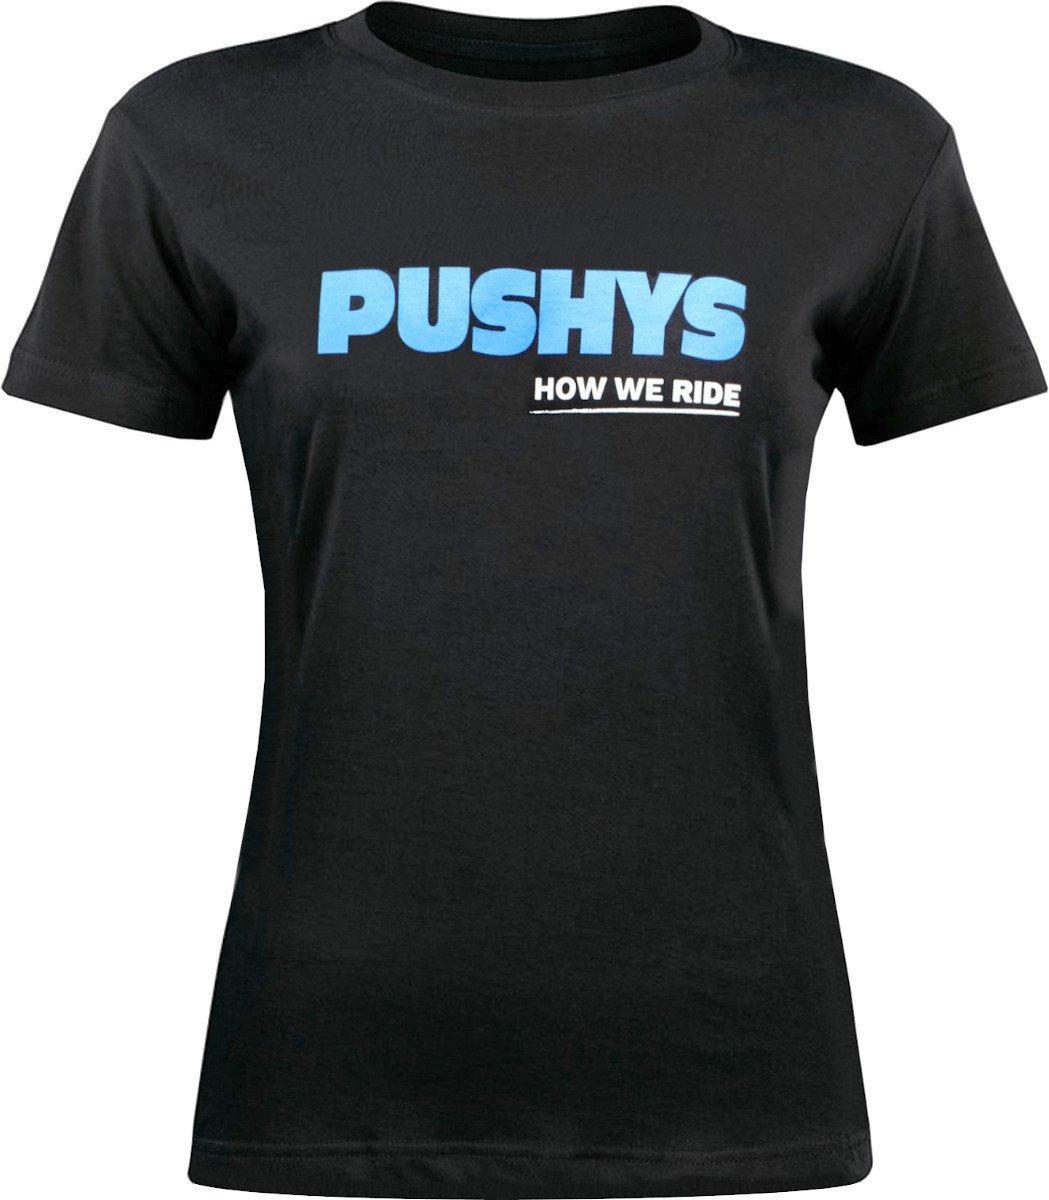 Pushys New Logo Womens Casual T-Shirt Black 2022